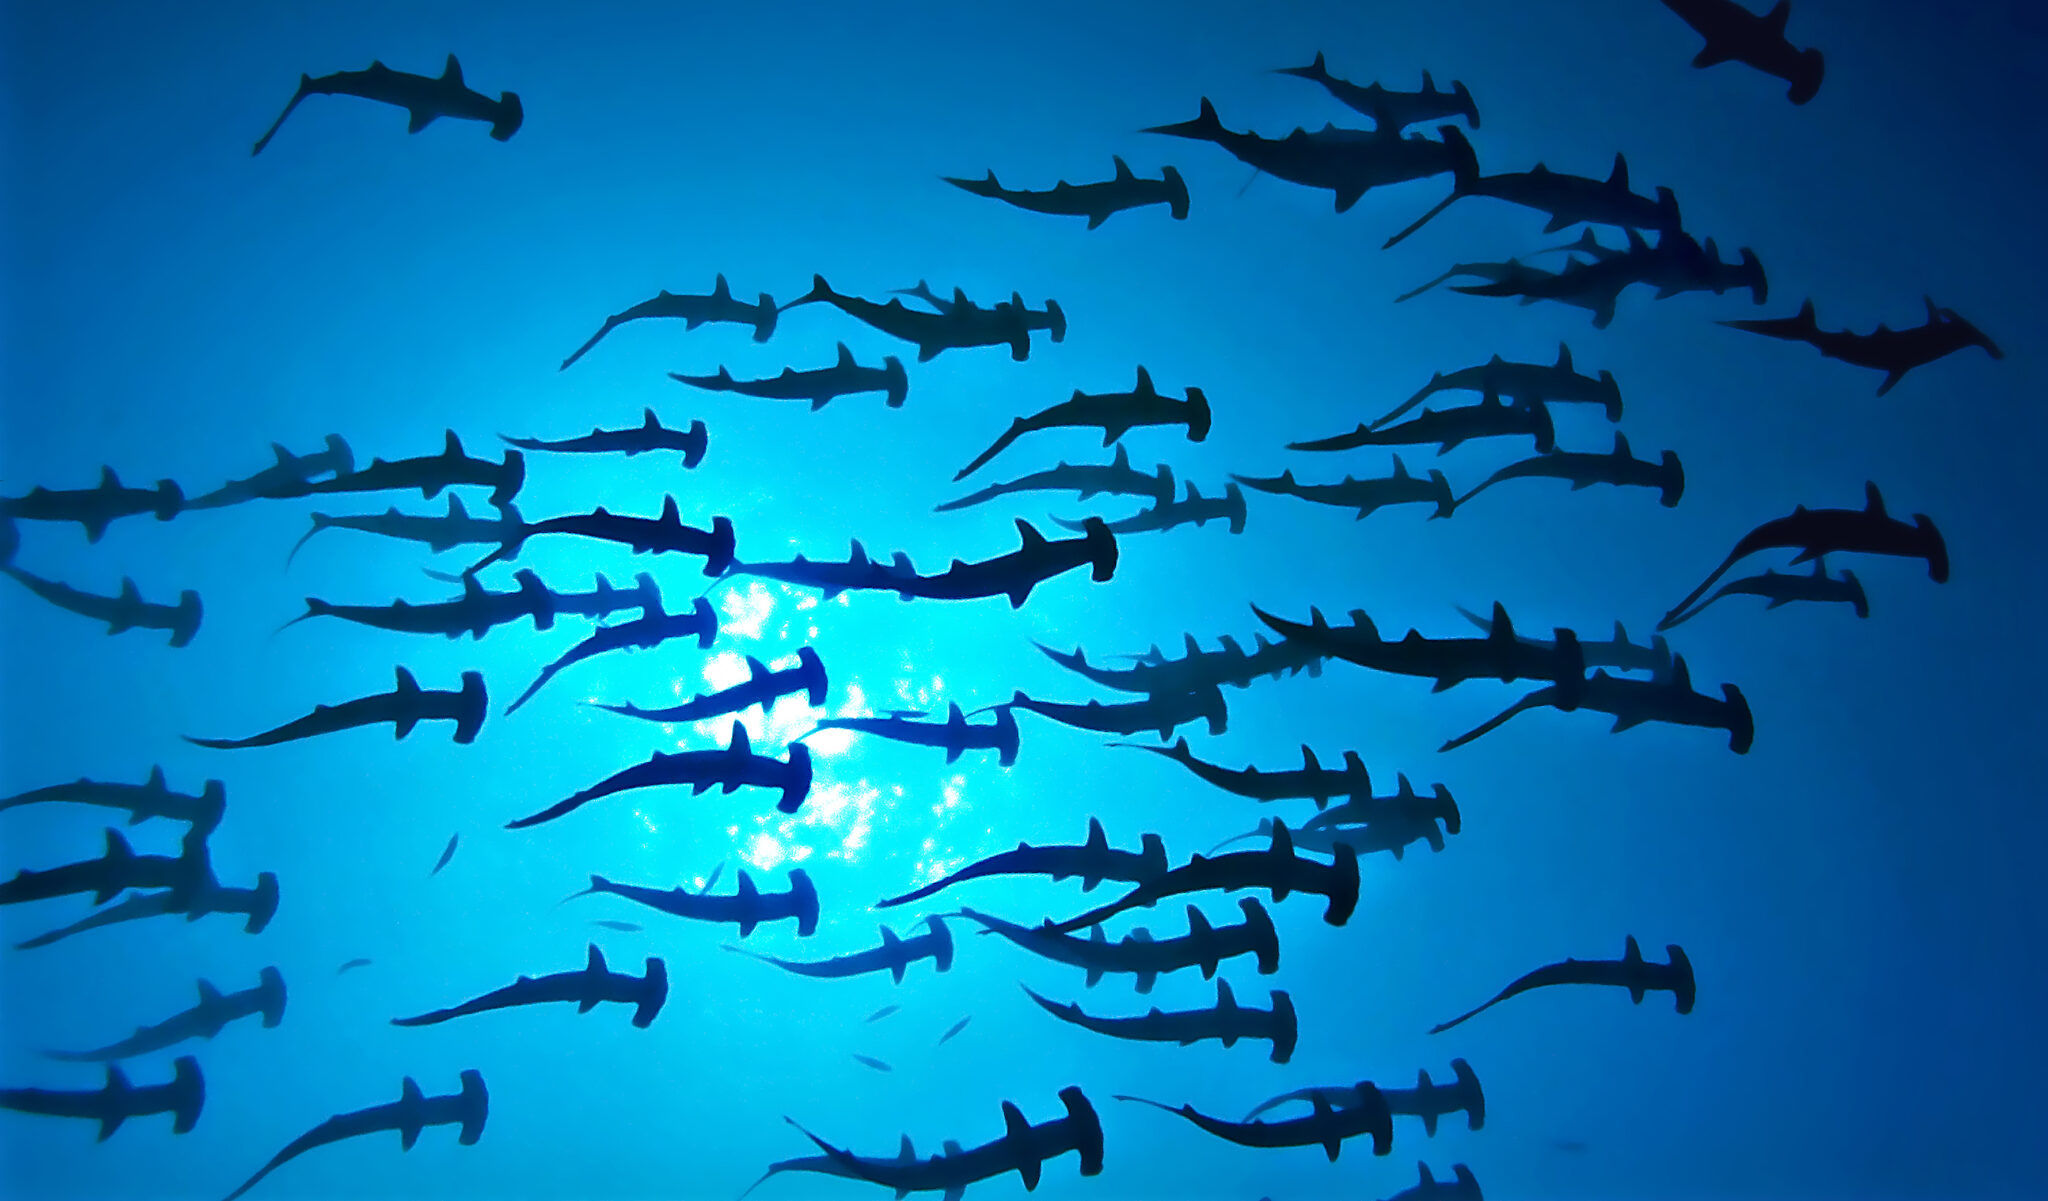 School of hammerhead sharks swimming | Marine life in Colombia 